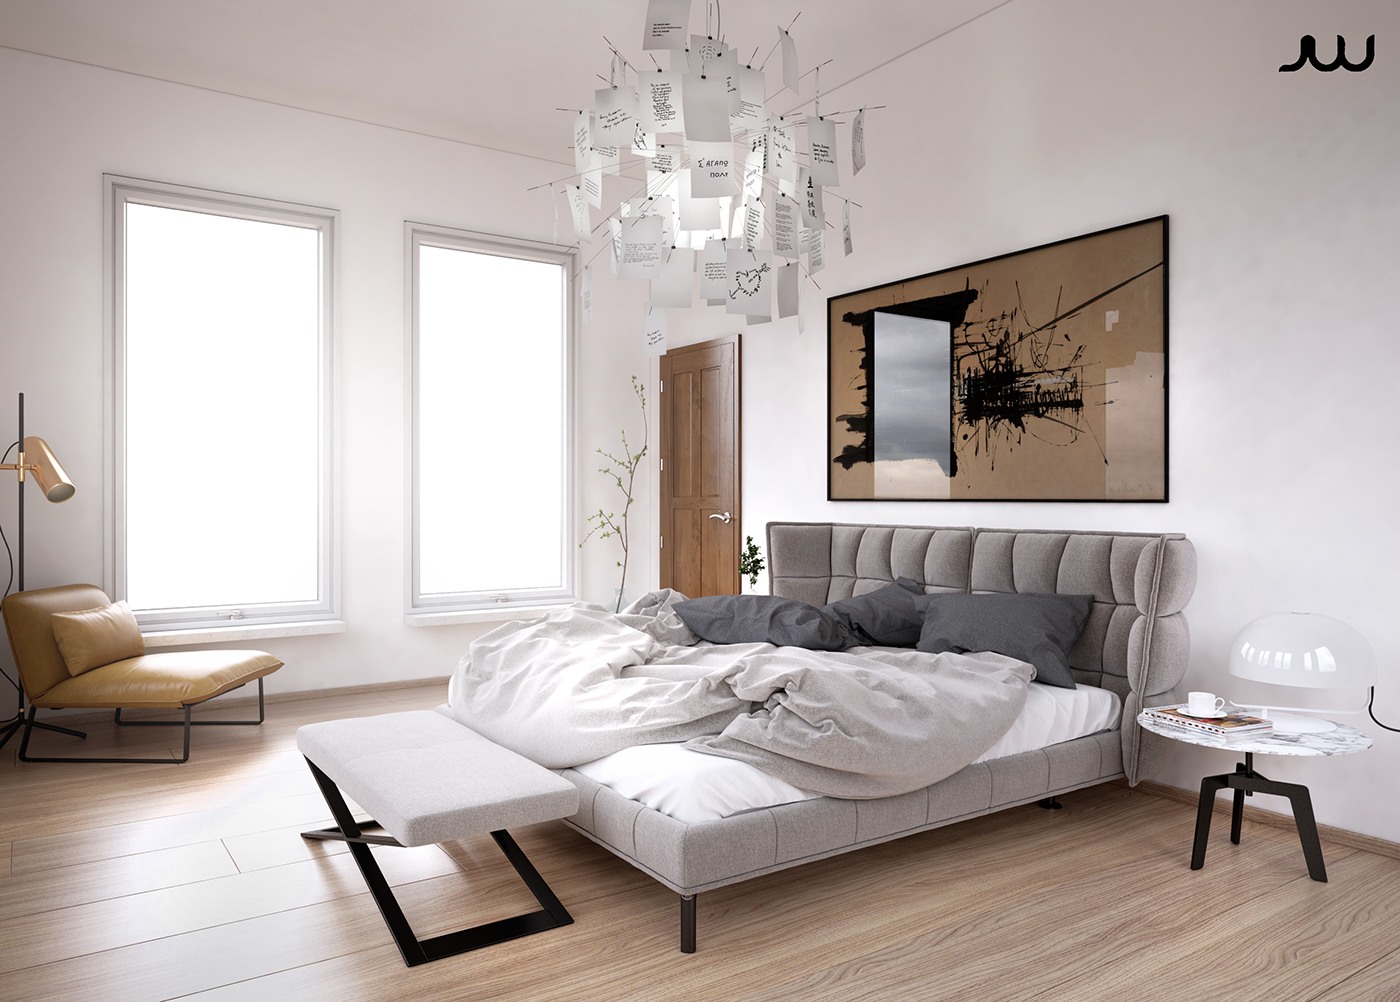 Modern bedroom design and decoration ideas "width =" 1400 "height =" 1002 "srcset =" https://mileray.com/wp-content/uploads/2020/05/1588510875_416_10-Modern-Bedroom-Design-Ideas-With-Luxury-Decorating-Ideas.jpg 1400w, https: // myfashionos. com / wp-content / uploads / 2016/06 / Javier-Wainstein-300x215.jpg 300w, https://mileray.com/wp-content/uploads/2016/06/Javier-Wainstein-768x550.jpg 768w, https: //mileray.com/wp-content/uploads/2016/06/Javier-Wainstein-1024x733.jpg 1024w, https://mileray.com/wp-content/uploads/2016/06/Javier-Wainstein-696x498. jpg 696w, https://mileray.com/wp-content/uploads/2016/06/Javier-Wainstein-1068x764.jpg 1068w, https://mileray.com/wp-content/uploads/2016/06/Javier- Wainstein-587x420.jpg 587w "sizes =" (maximum width: 1400px) 100vw, 1400px